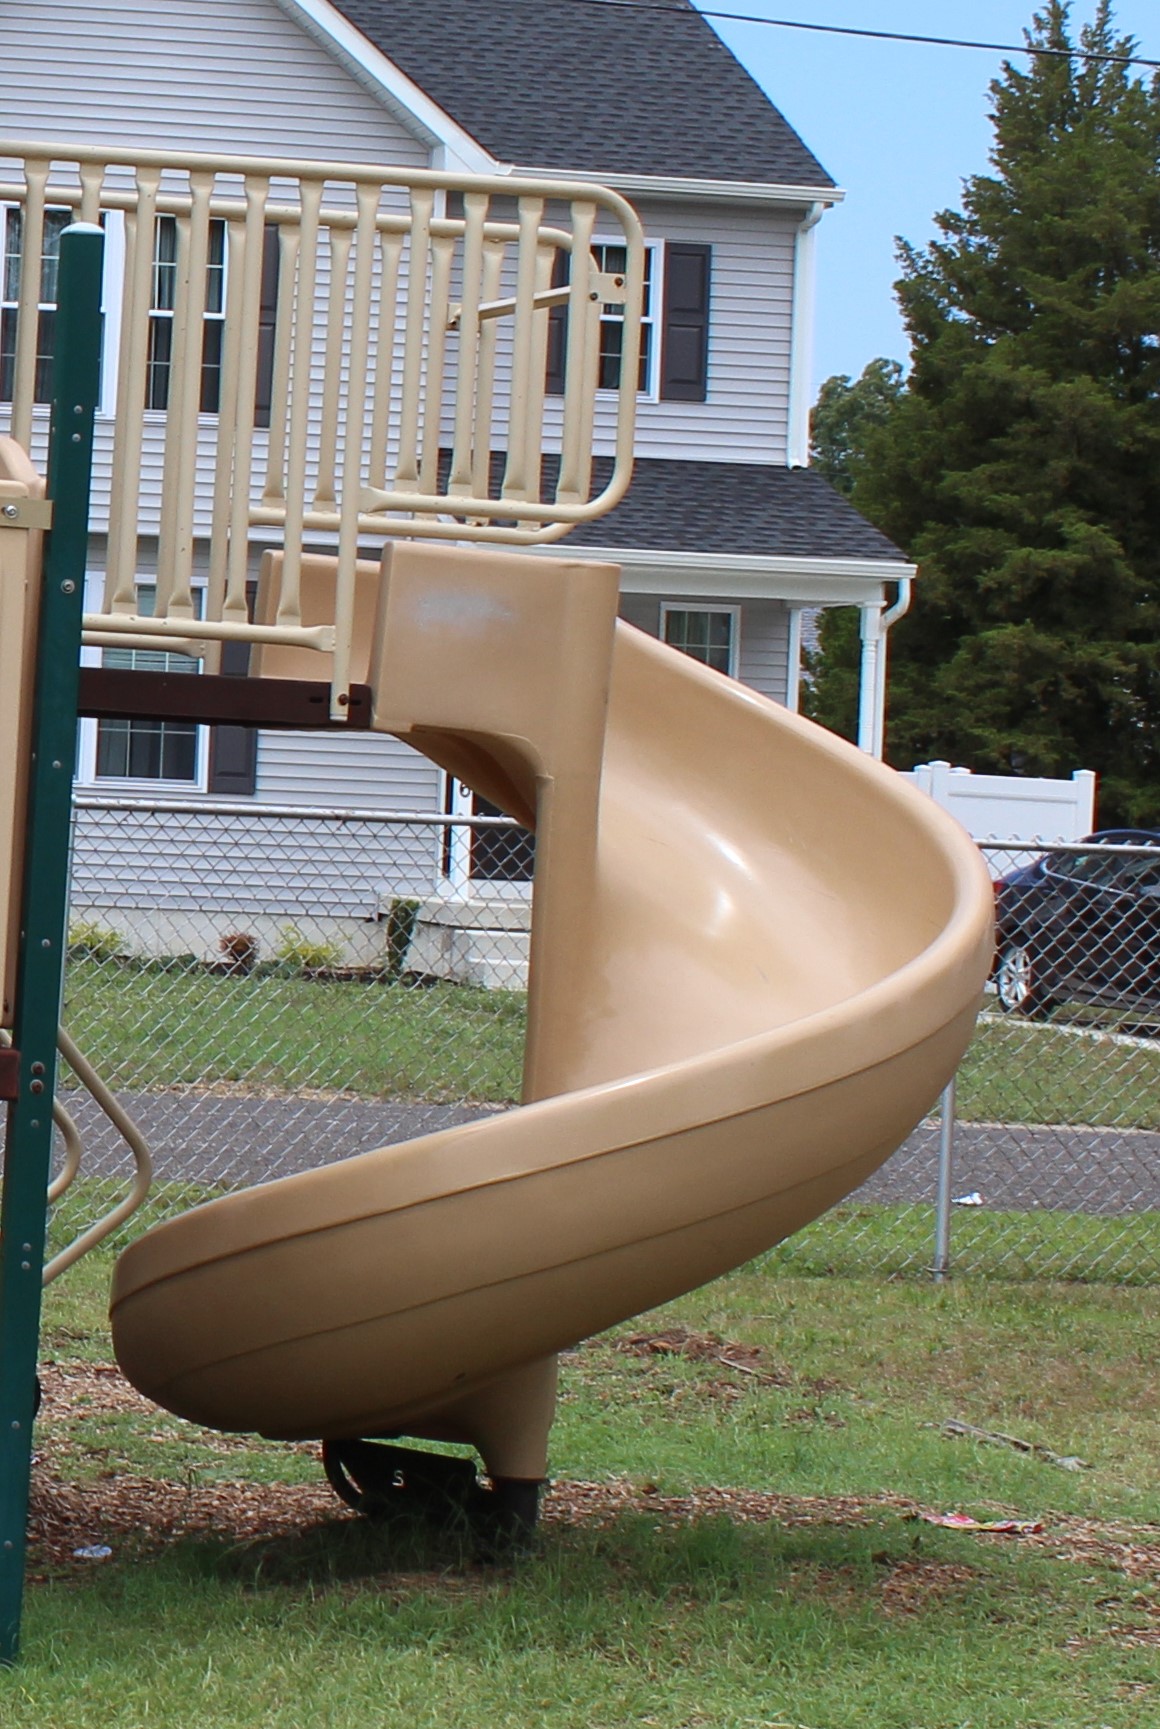 Friendship Park Playground in Millville NJ - SLIDE - twisting slide